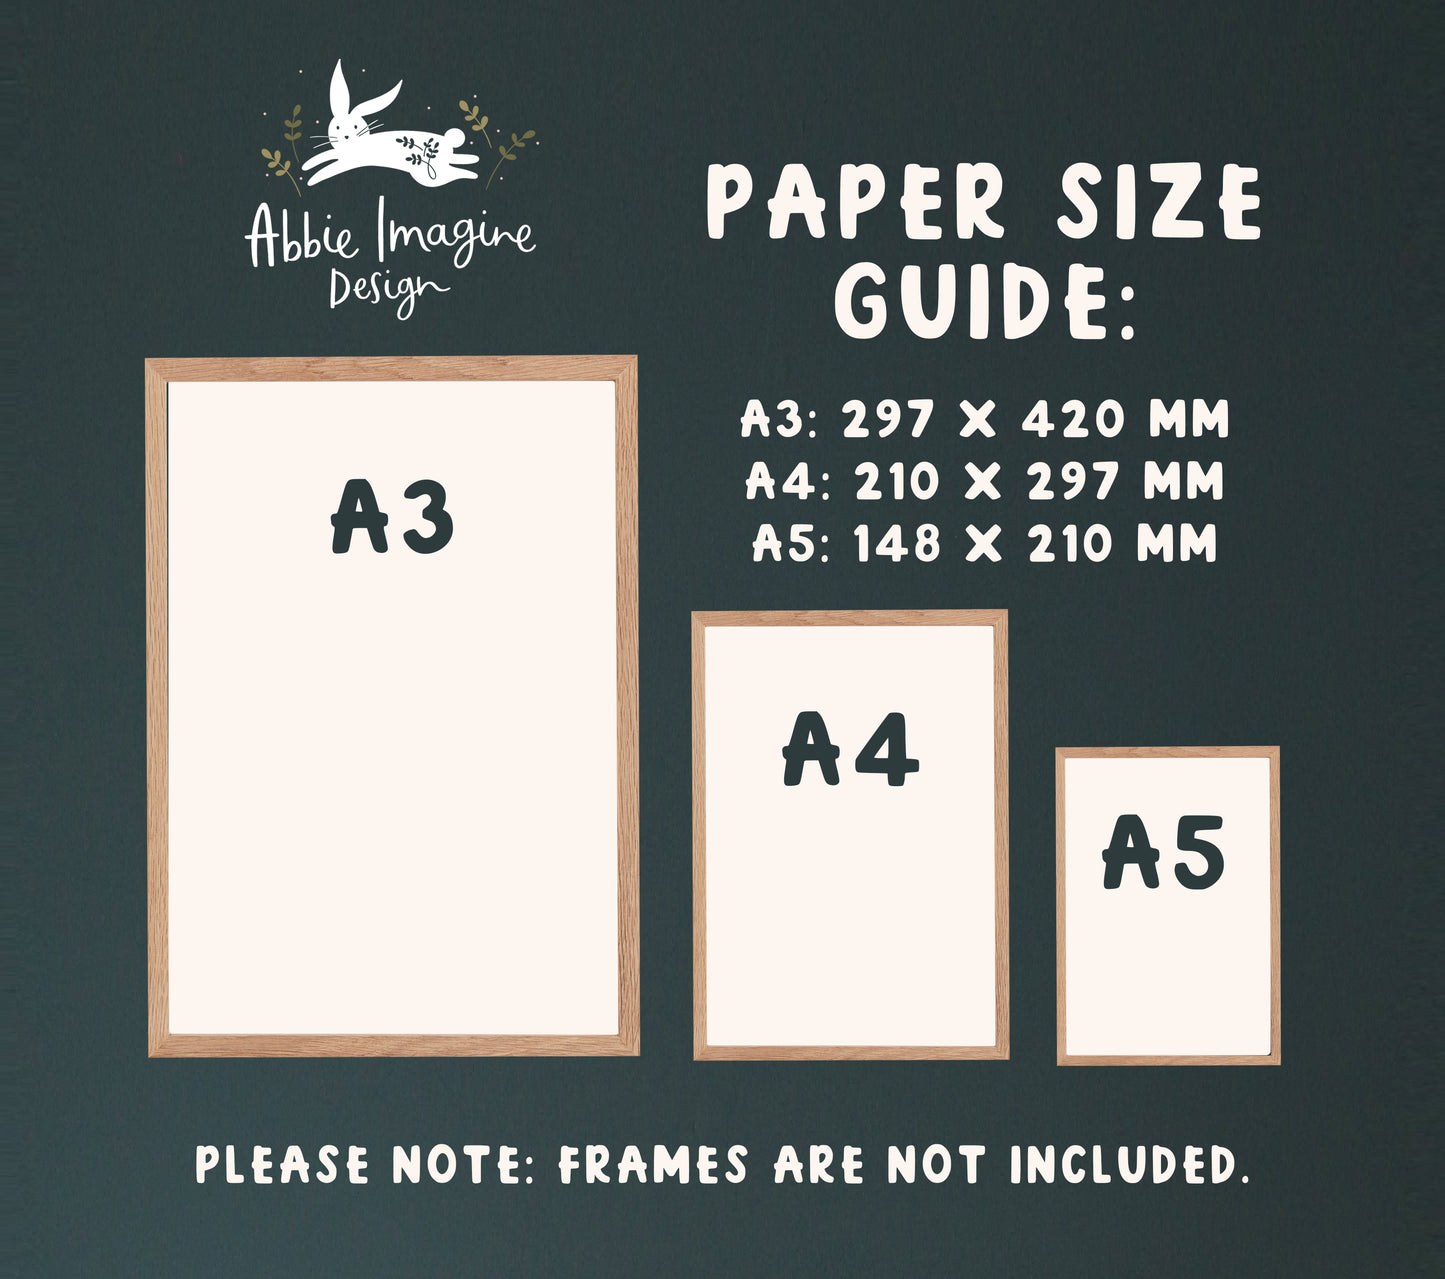 Print sizes by Abbie Imagine